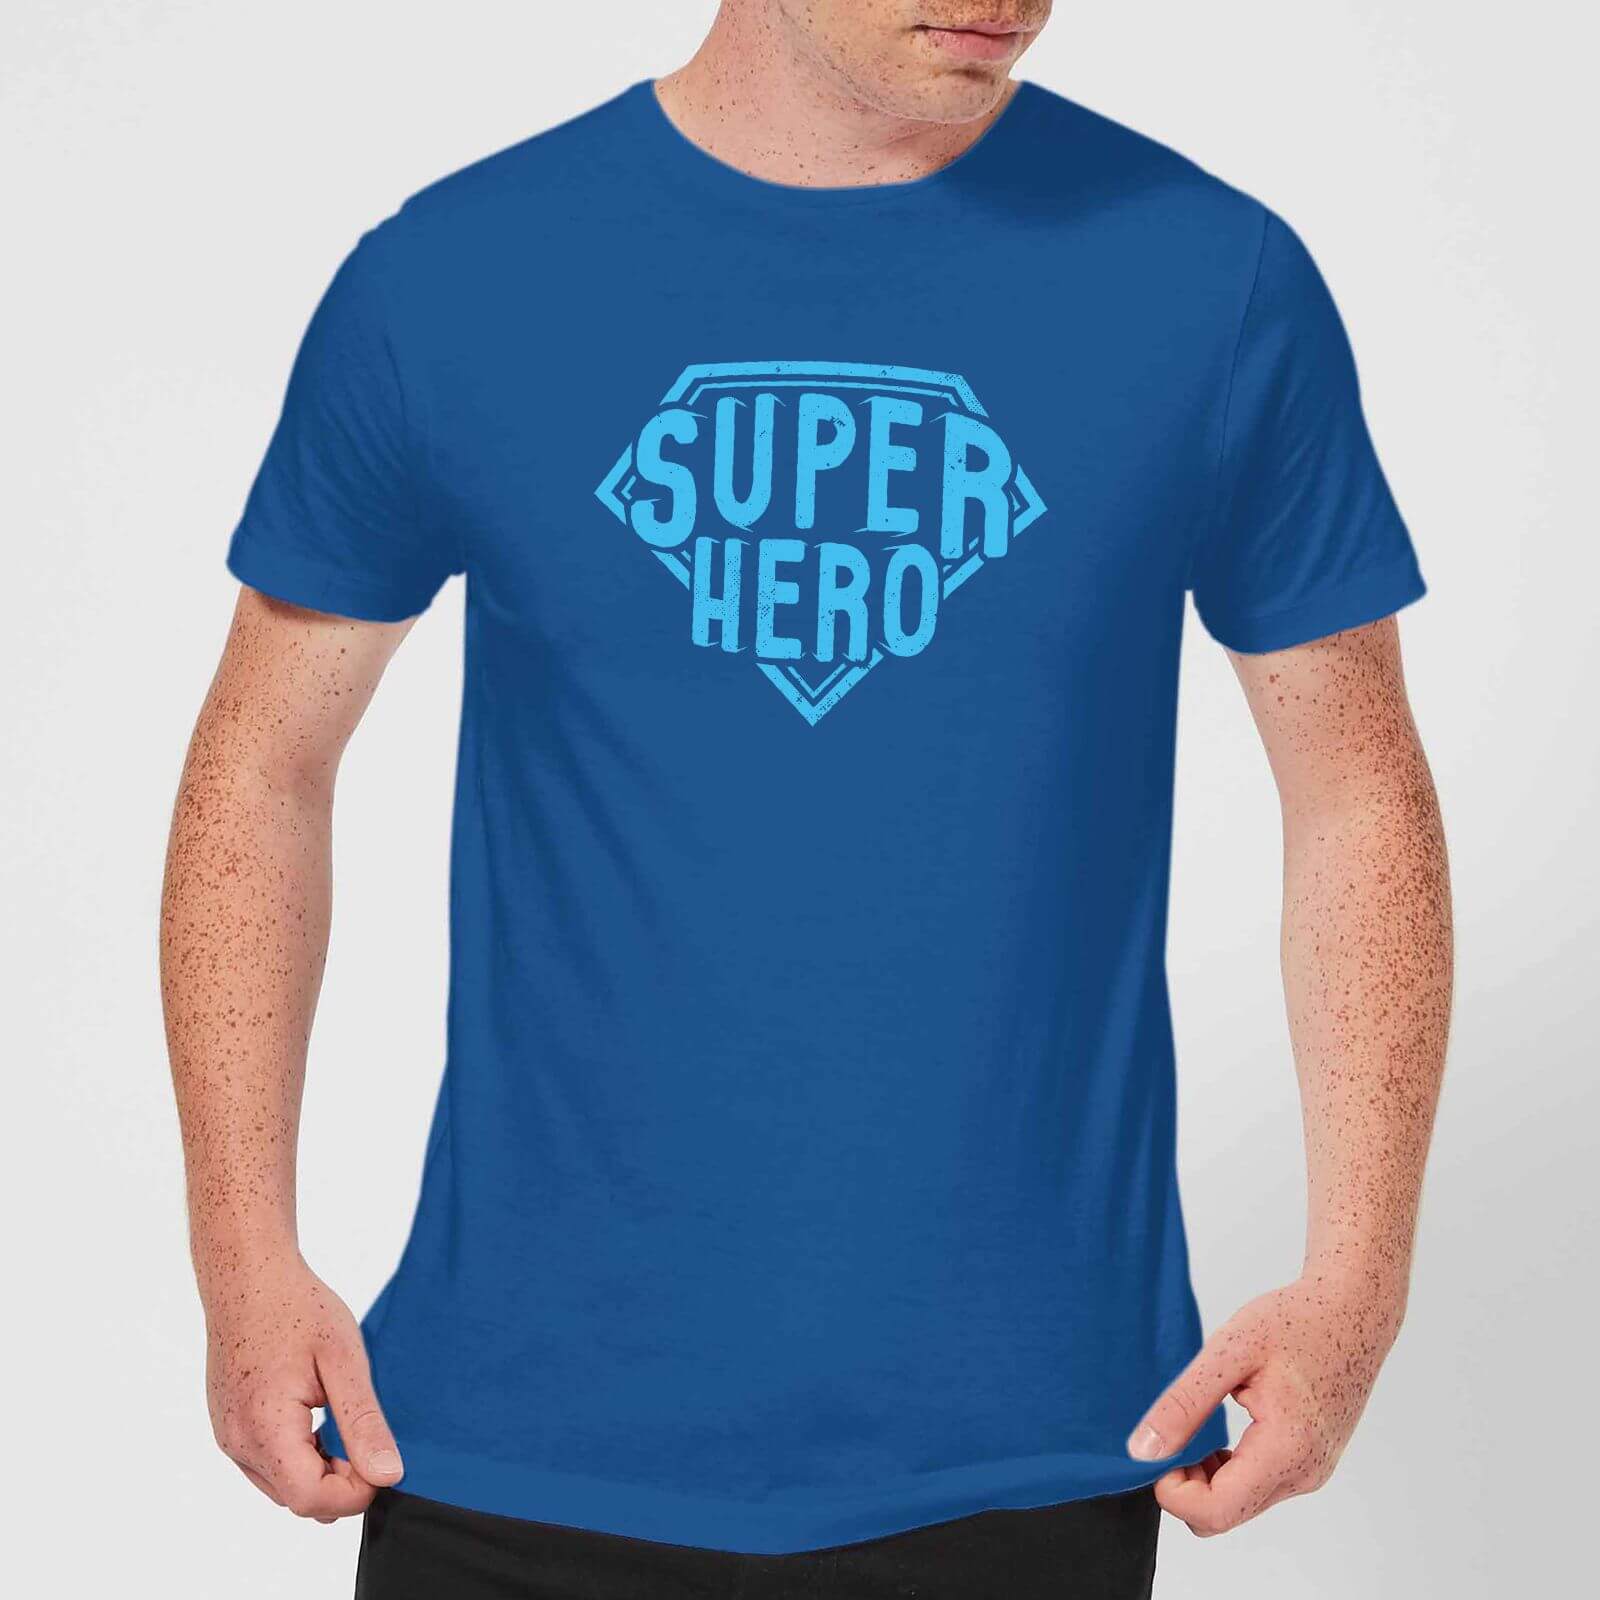 Super Hero Men's T-Shirt - Royal Blue - S - royal blue